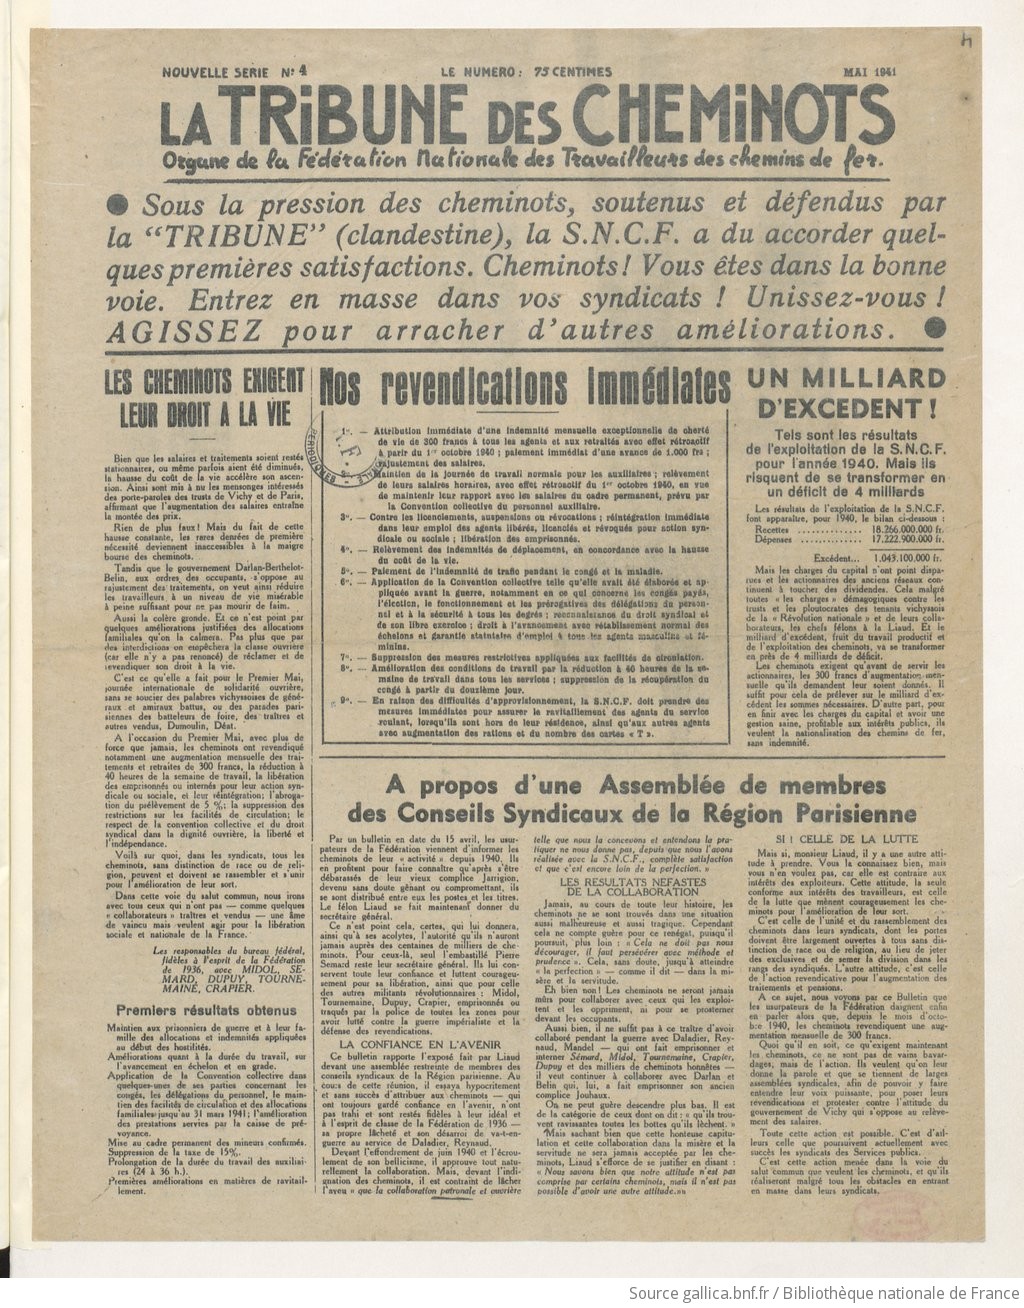 La Tribune des cheminots [clandestine], n°4, mai 1941